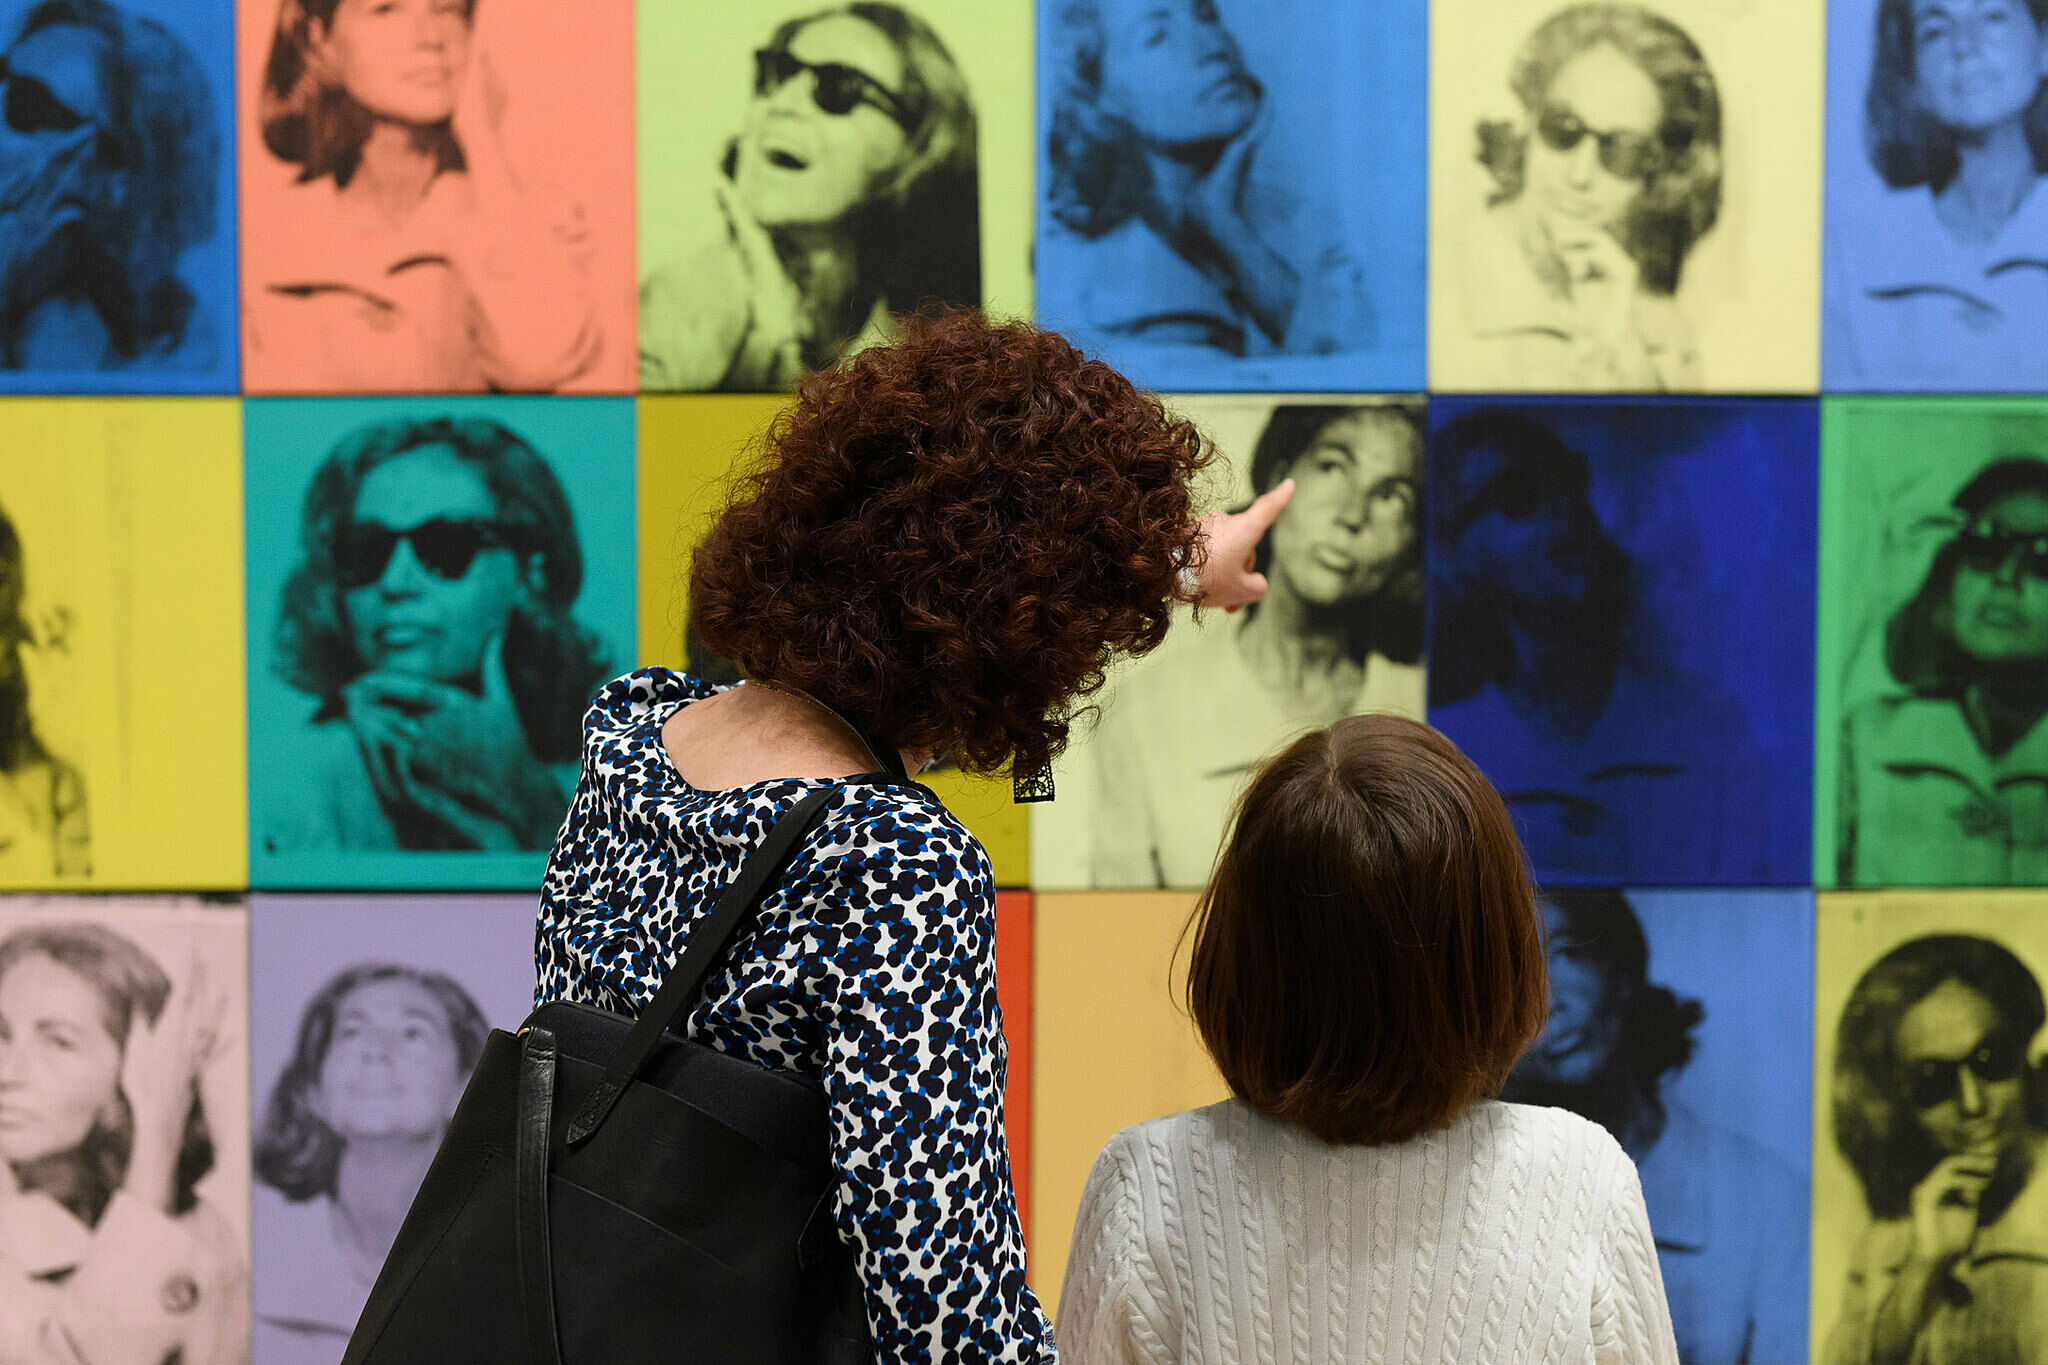 Families explore artwork in the galleries